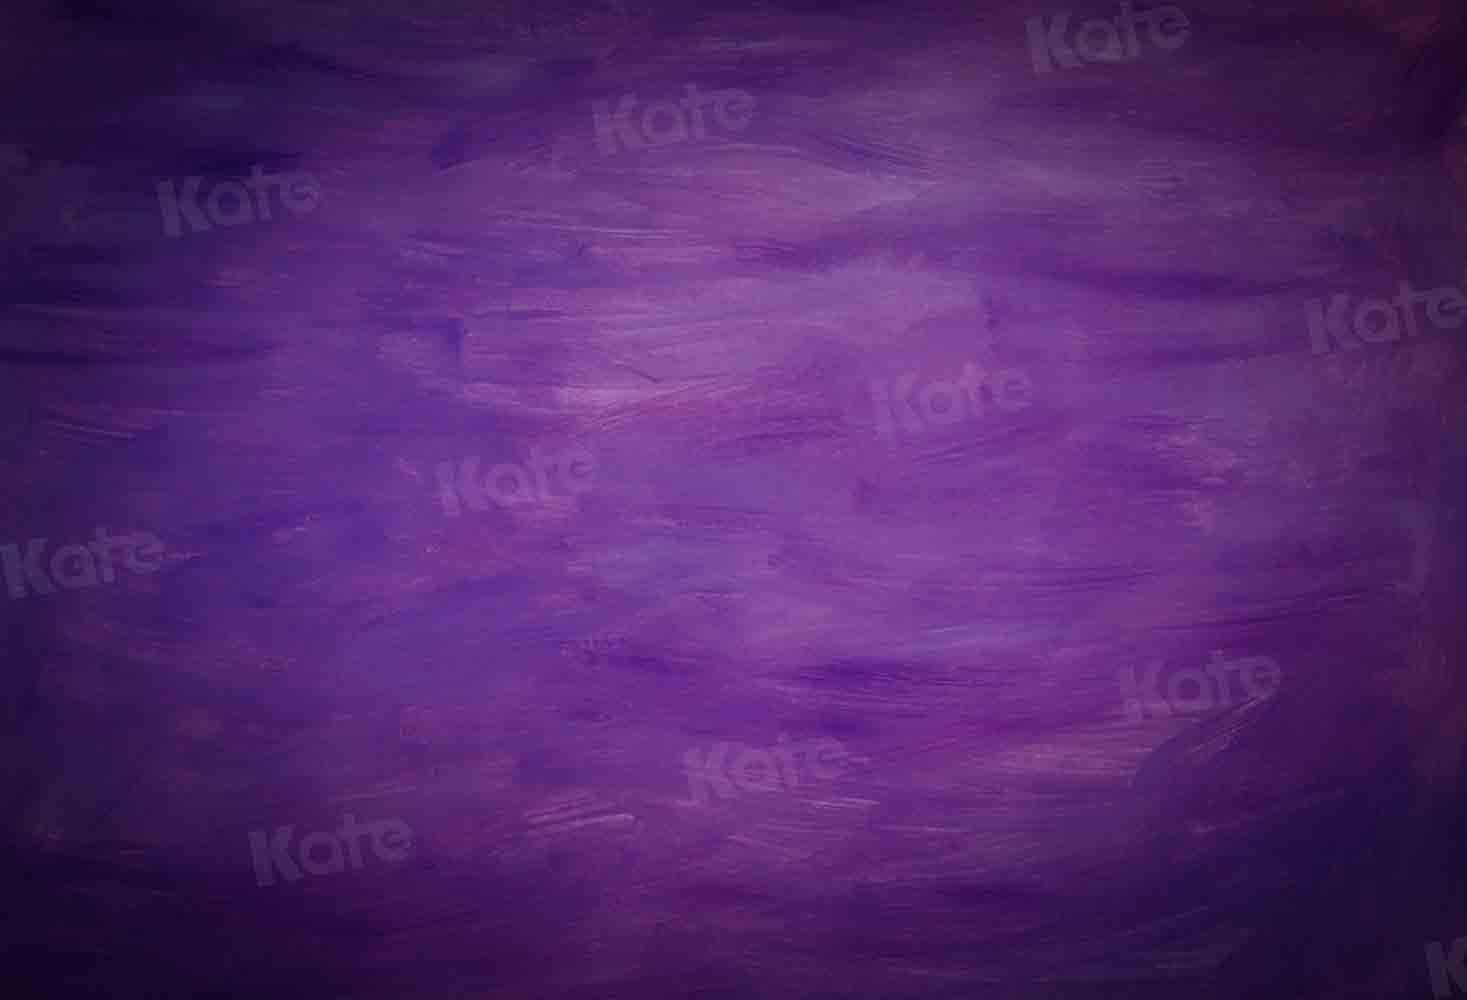 Kate Abstrakter lila Hintergrund